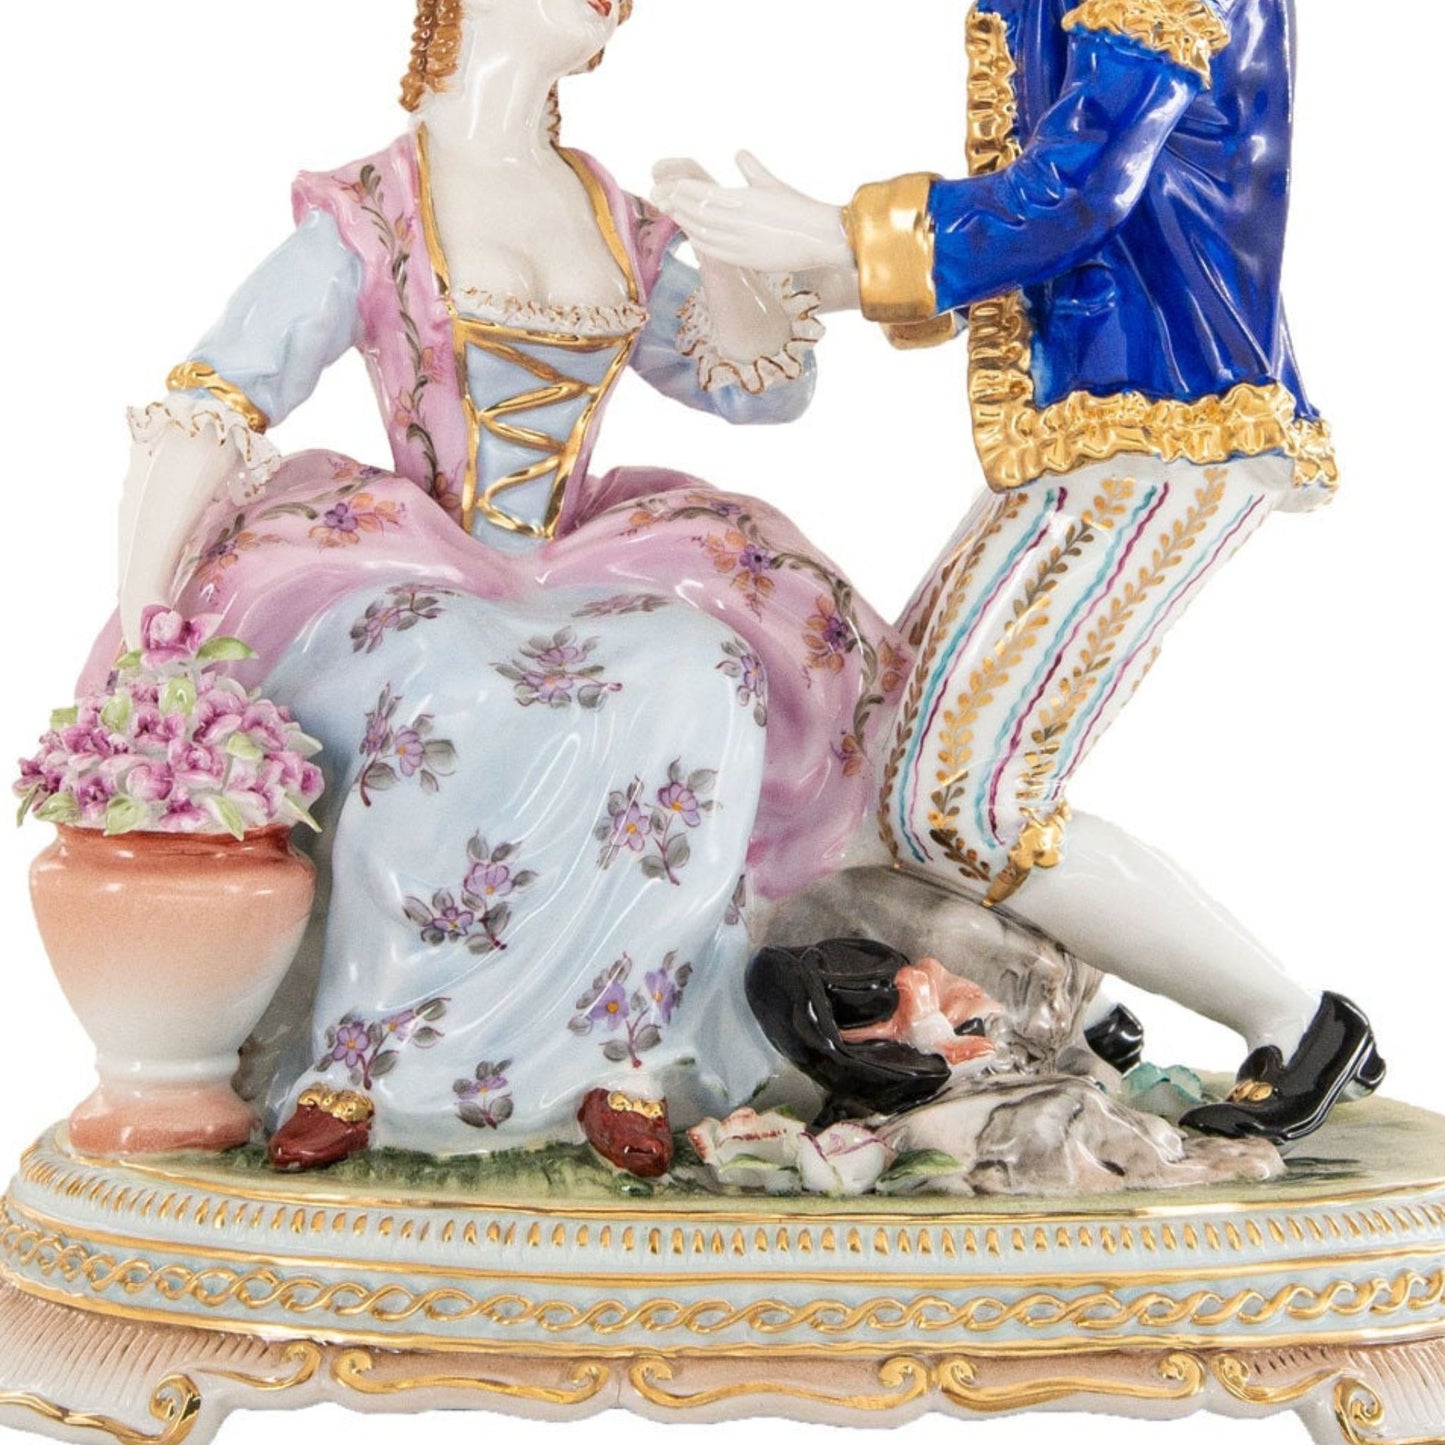 Proposal Porcelain Figurine